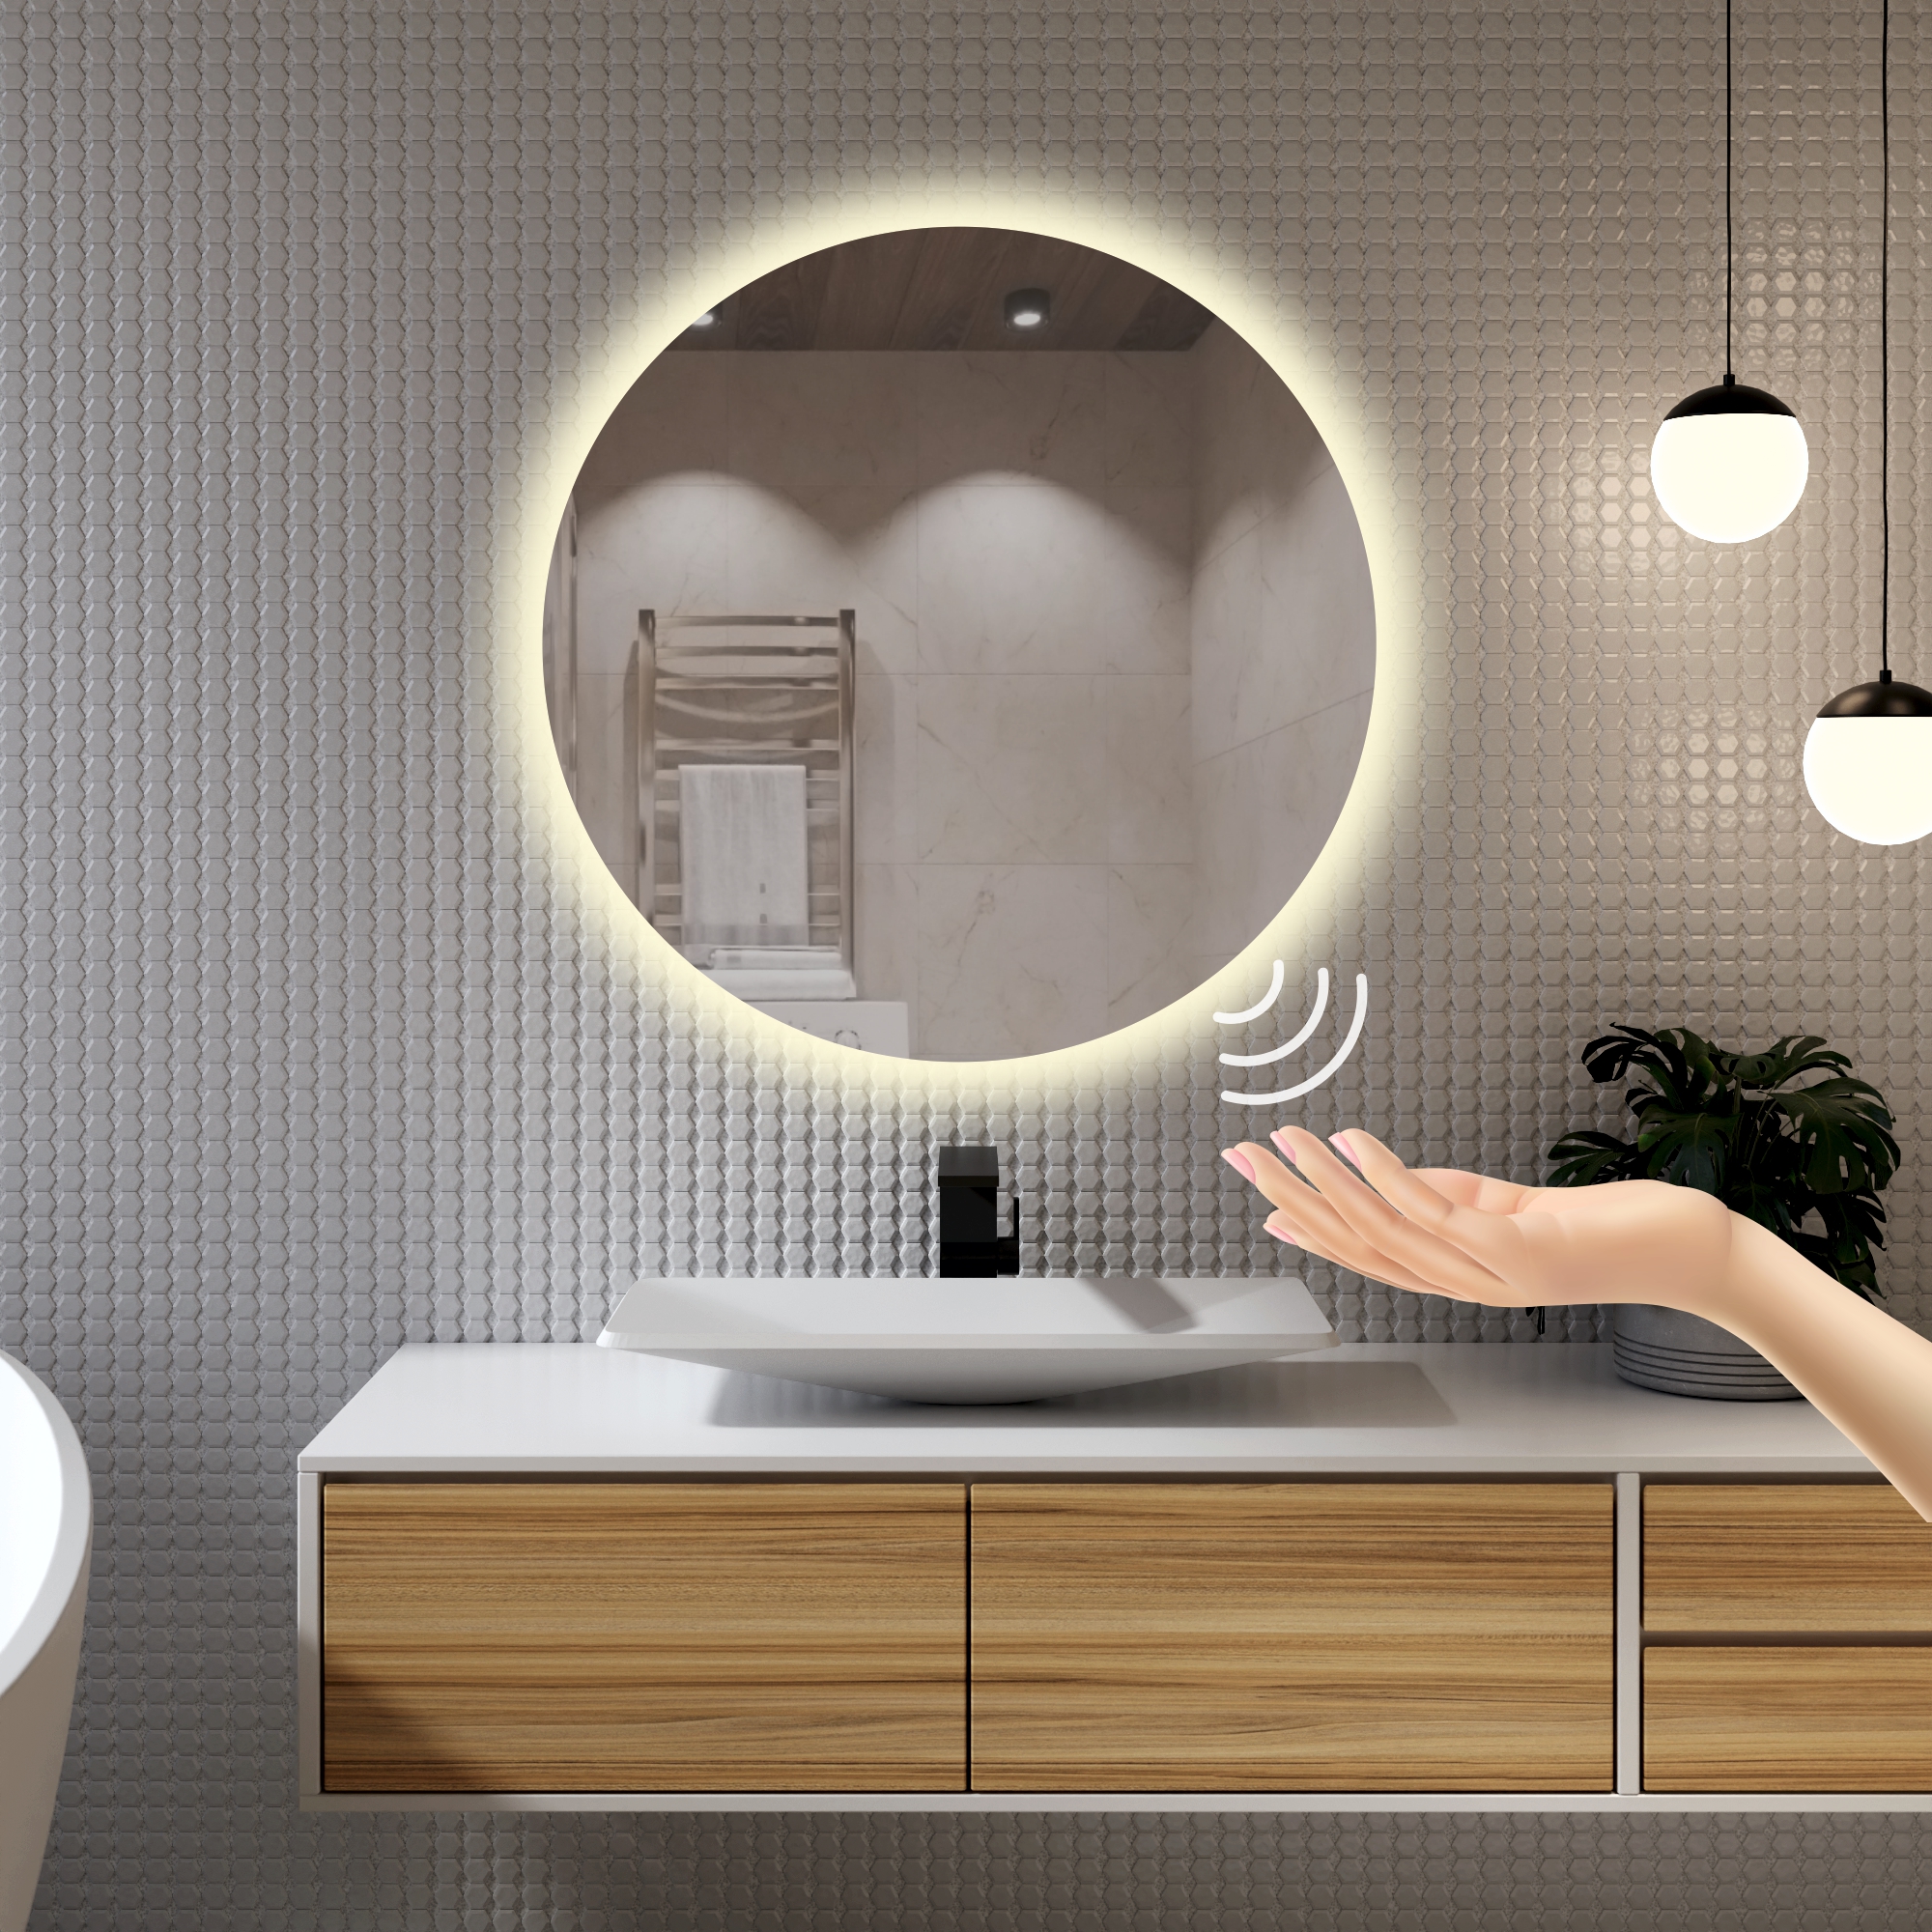 Зеркало для ванной Alfa Mirrors с дневной подсветкой 4200К круглое 60см, арт. Na-6Vzd зеркало silver mirrors